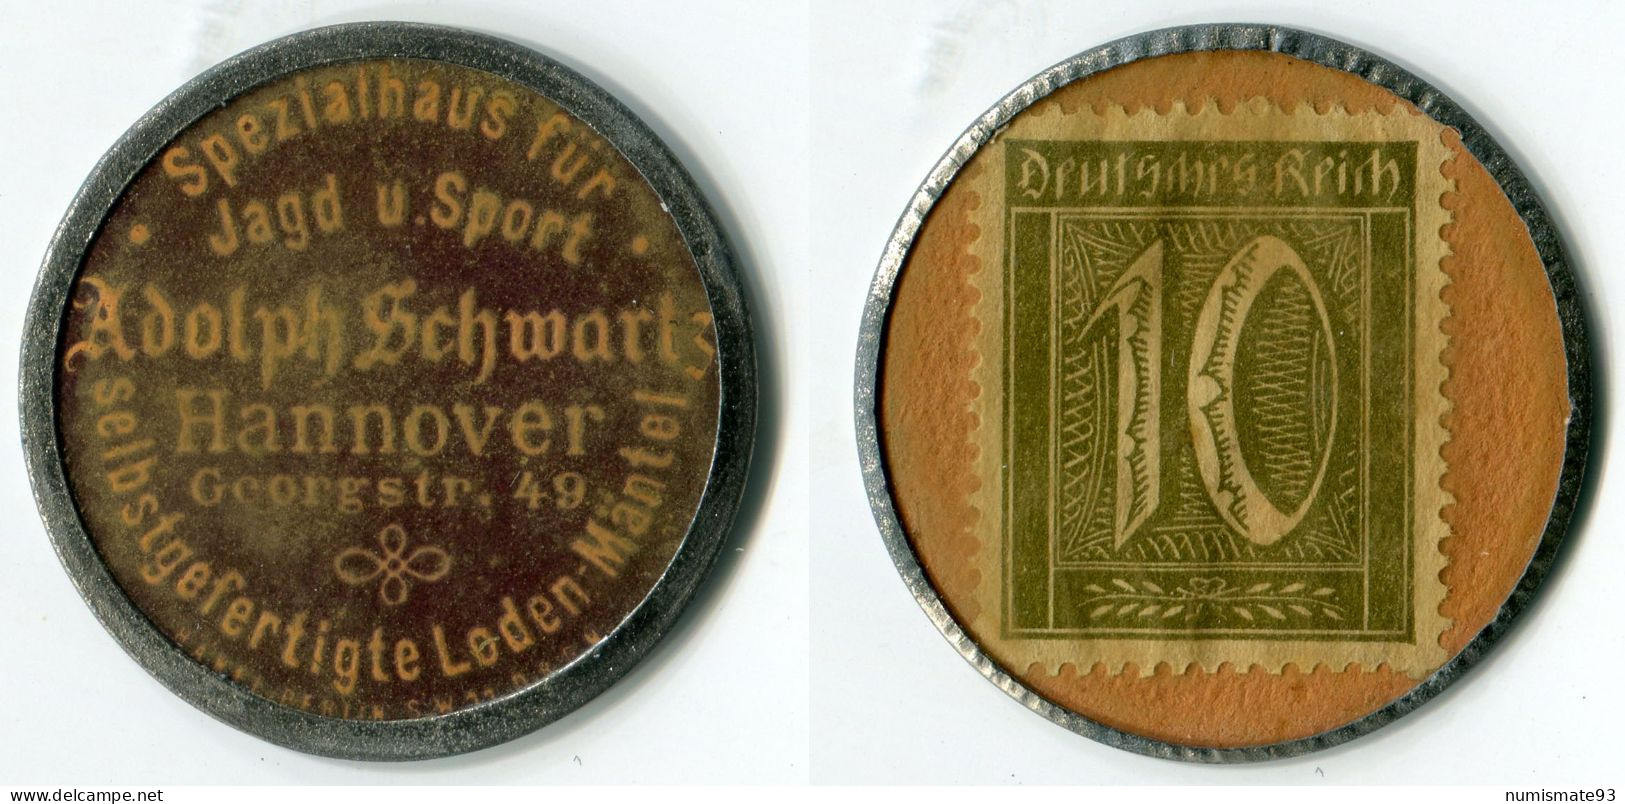 N93-0736 Timbre-monnaie Adolph Schwartz - 10 Pfennig - Kapselgeld - Encased Stamp - Notgeld